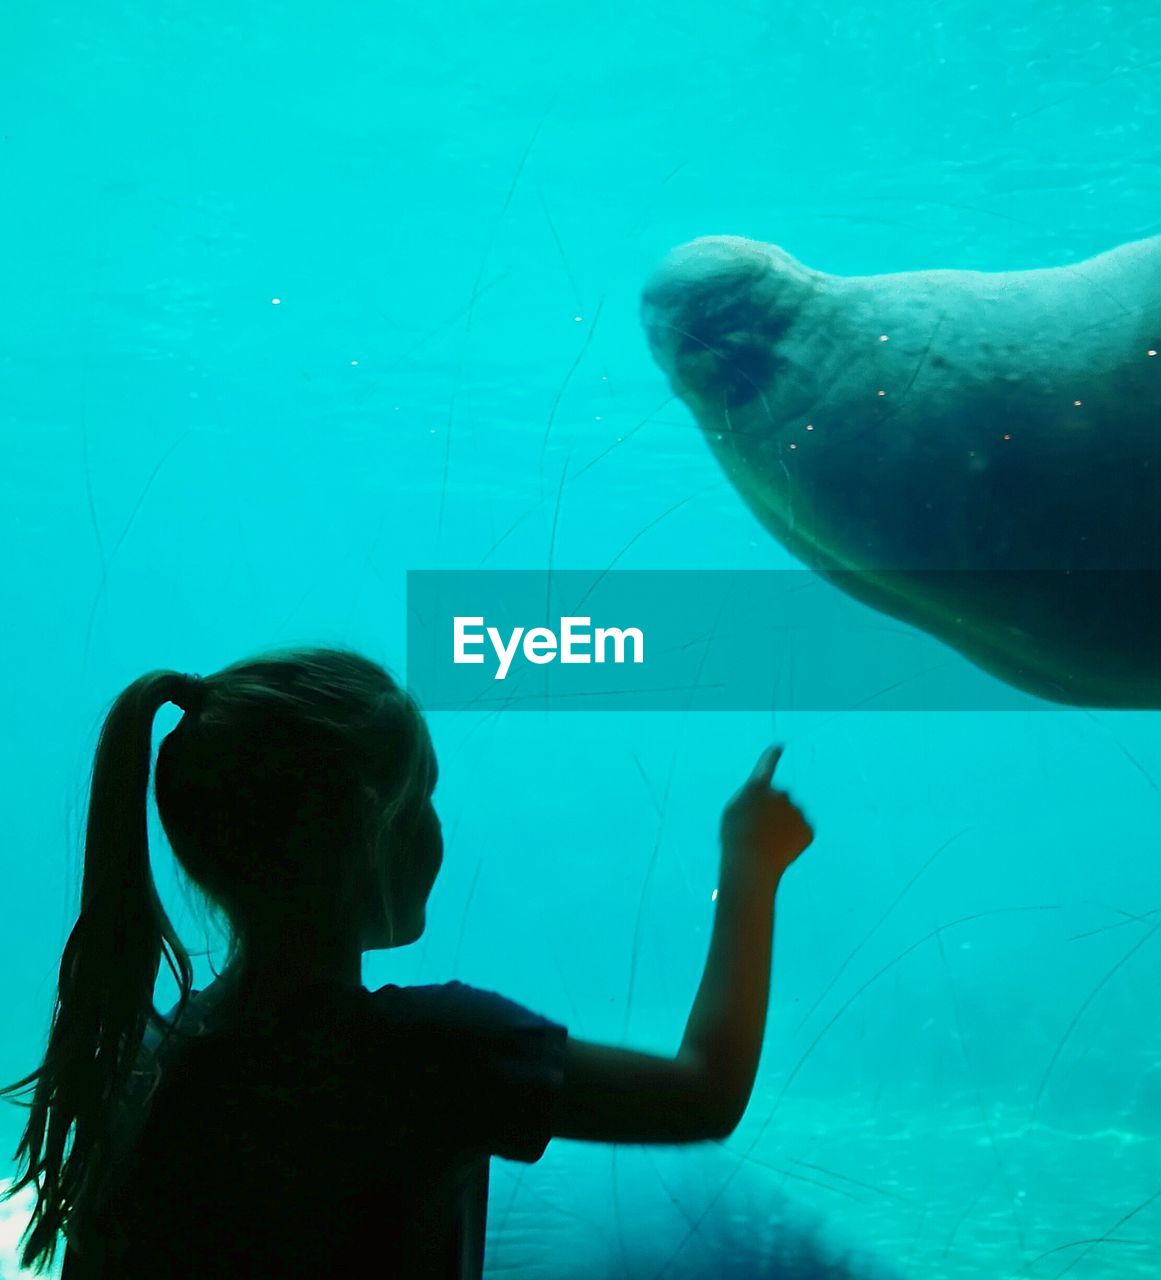 Girl pointing towards walrus swimming in aquarium